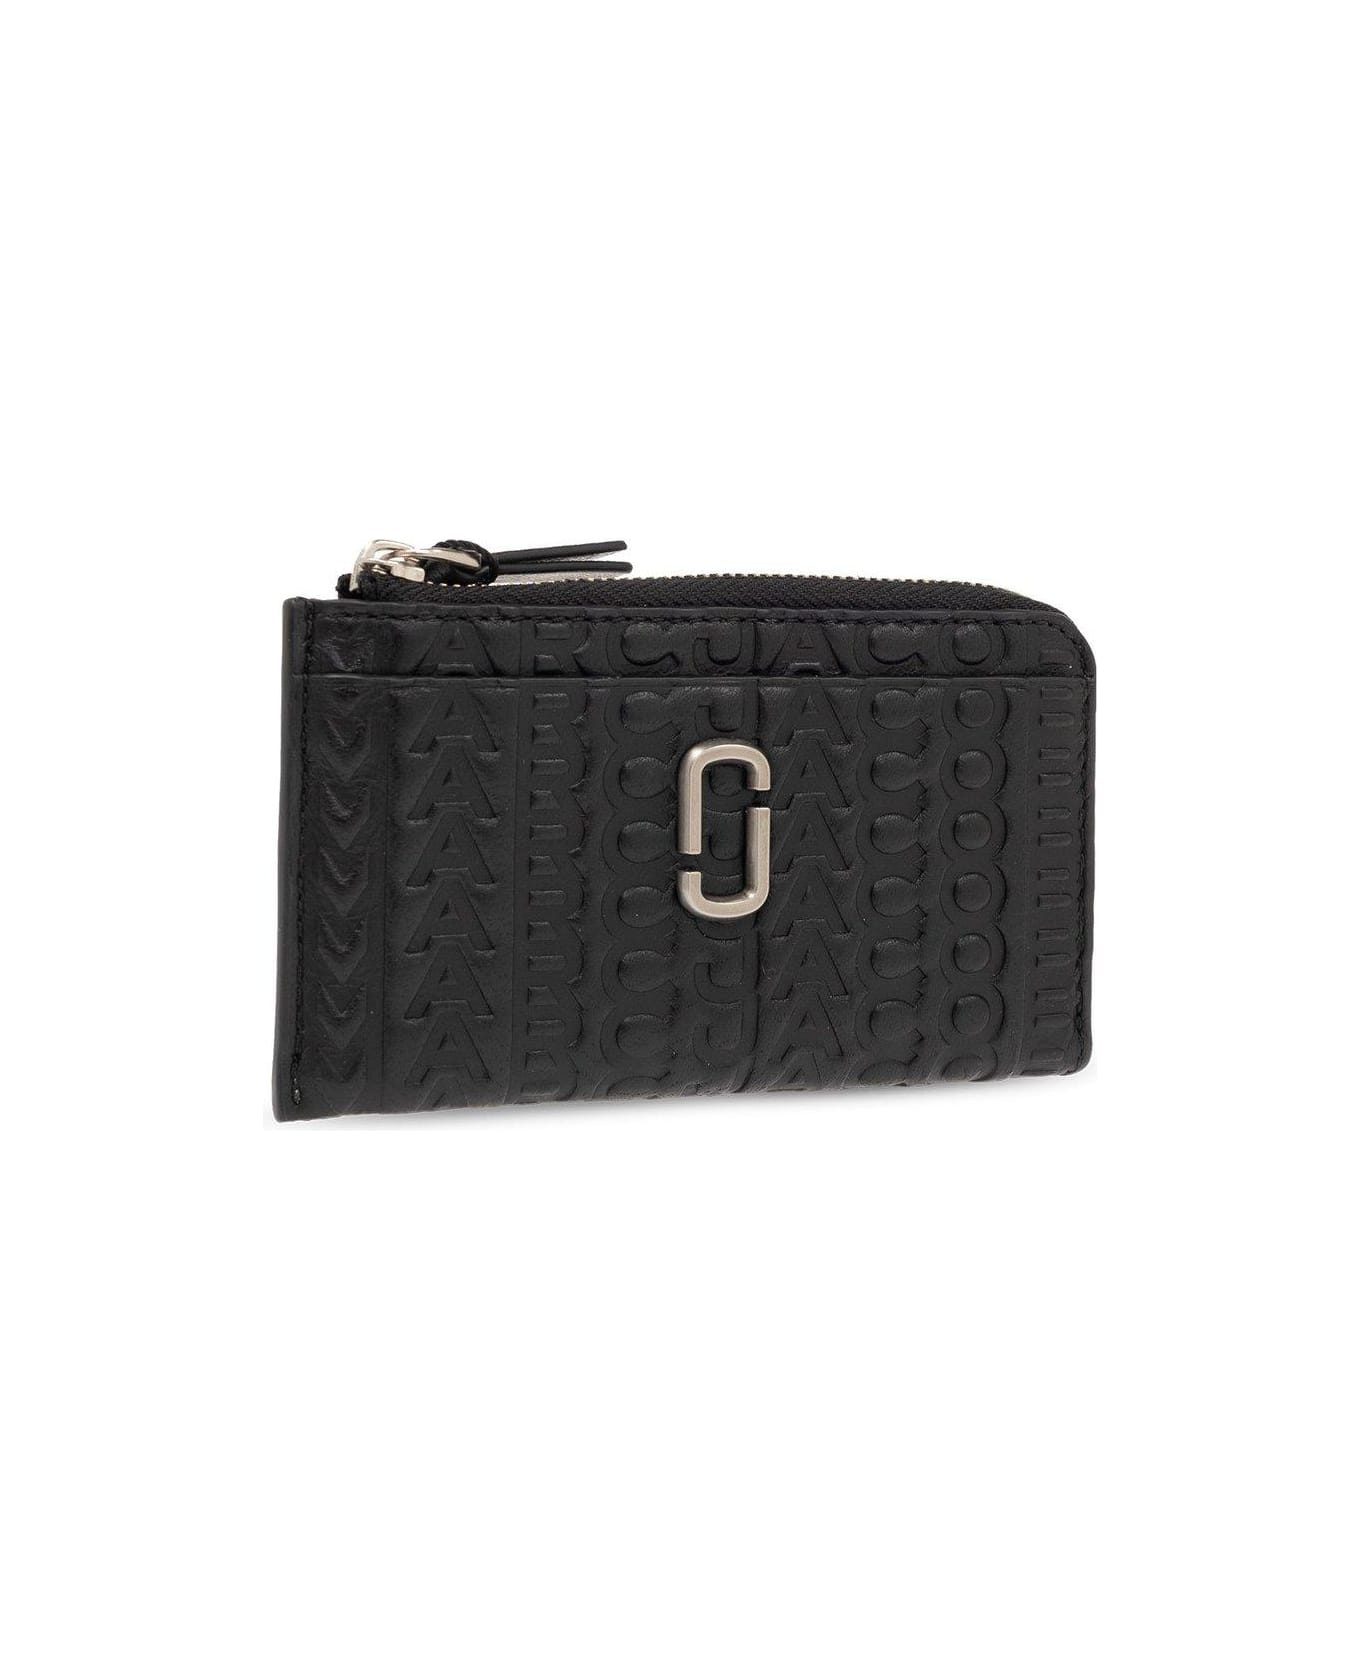 Marc Jacobs The Marc Top Zip Multi Wallet - Black 財布